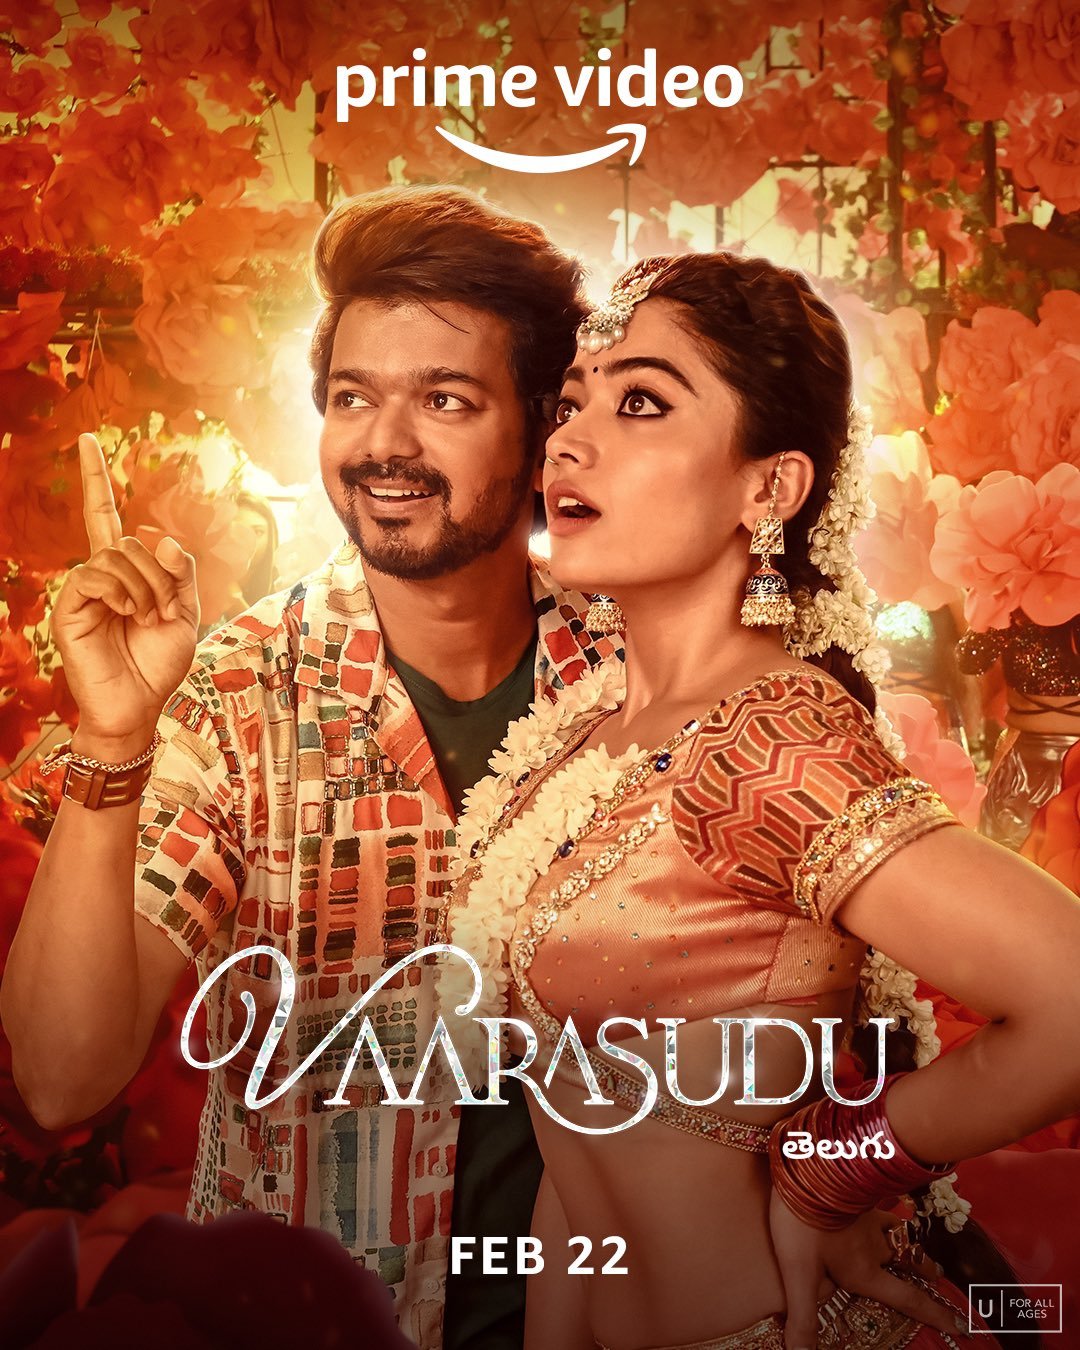 Varasudu OTT release date